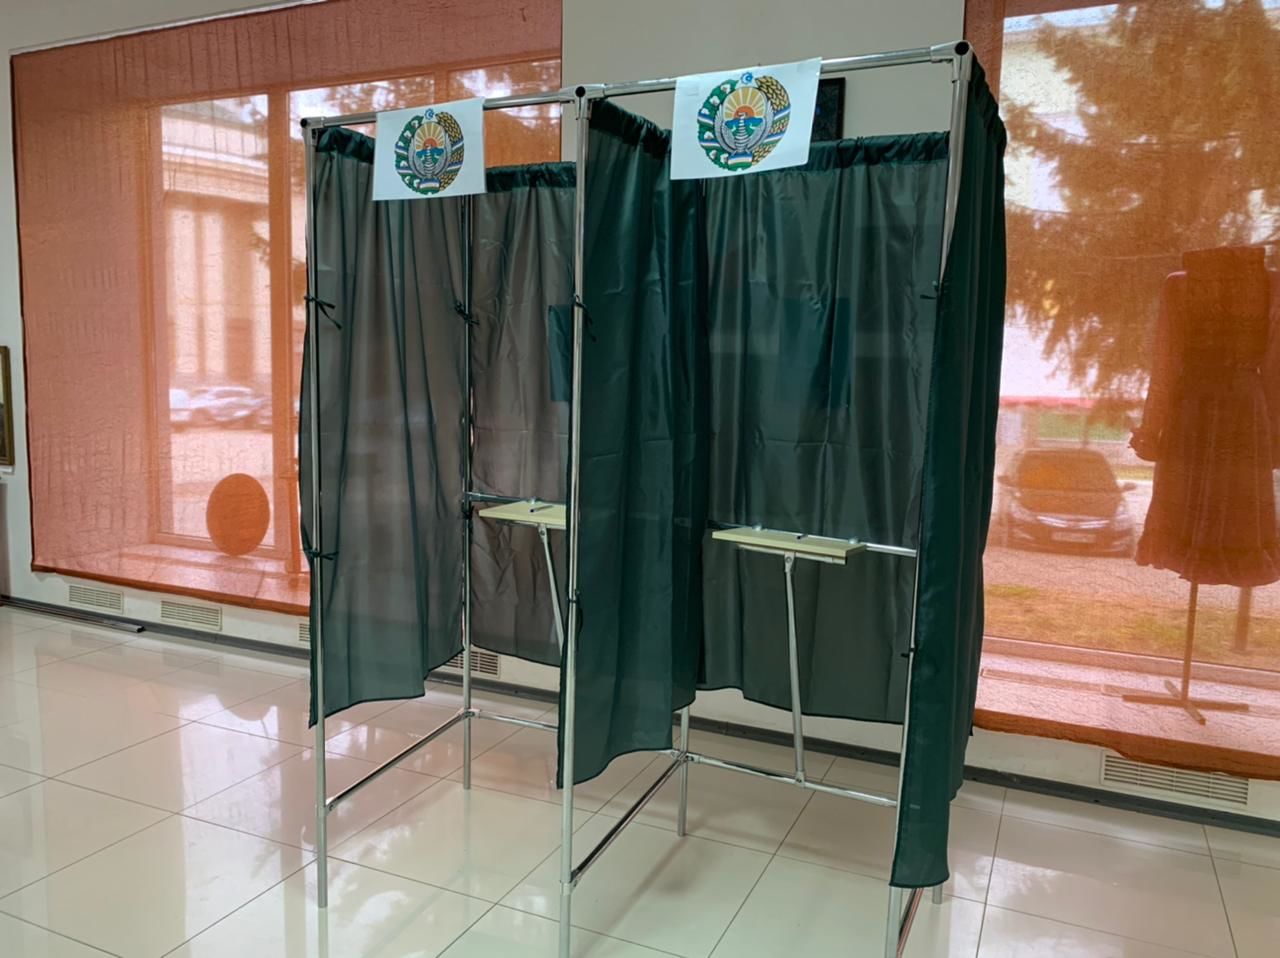 Сегодня граждане Узбекистана досрочно голосуют в Бугульме за своего президента